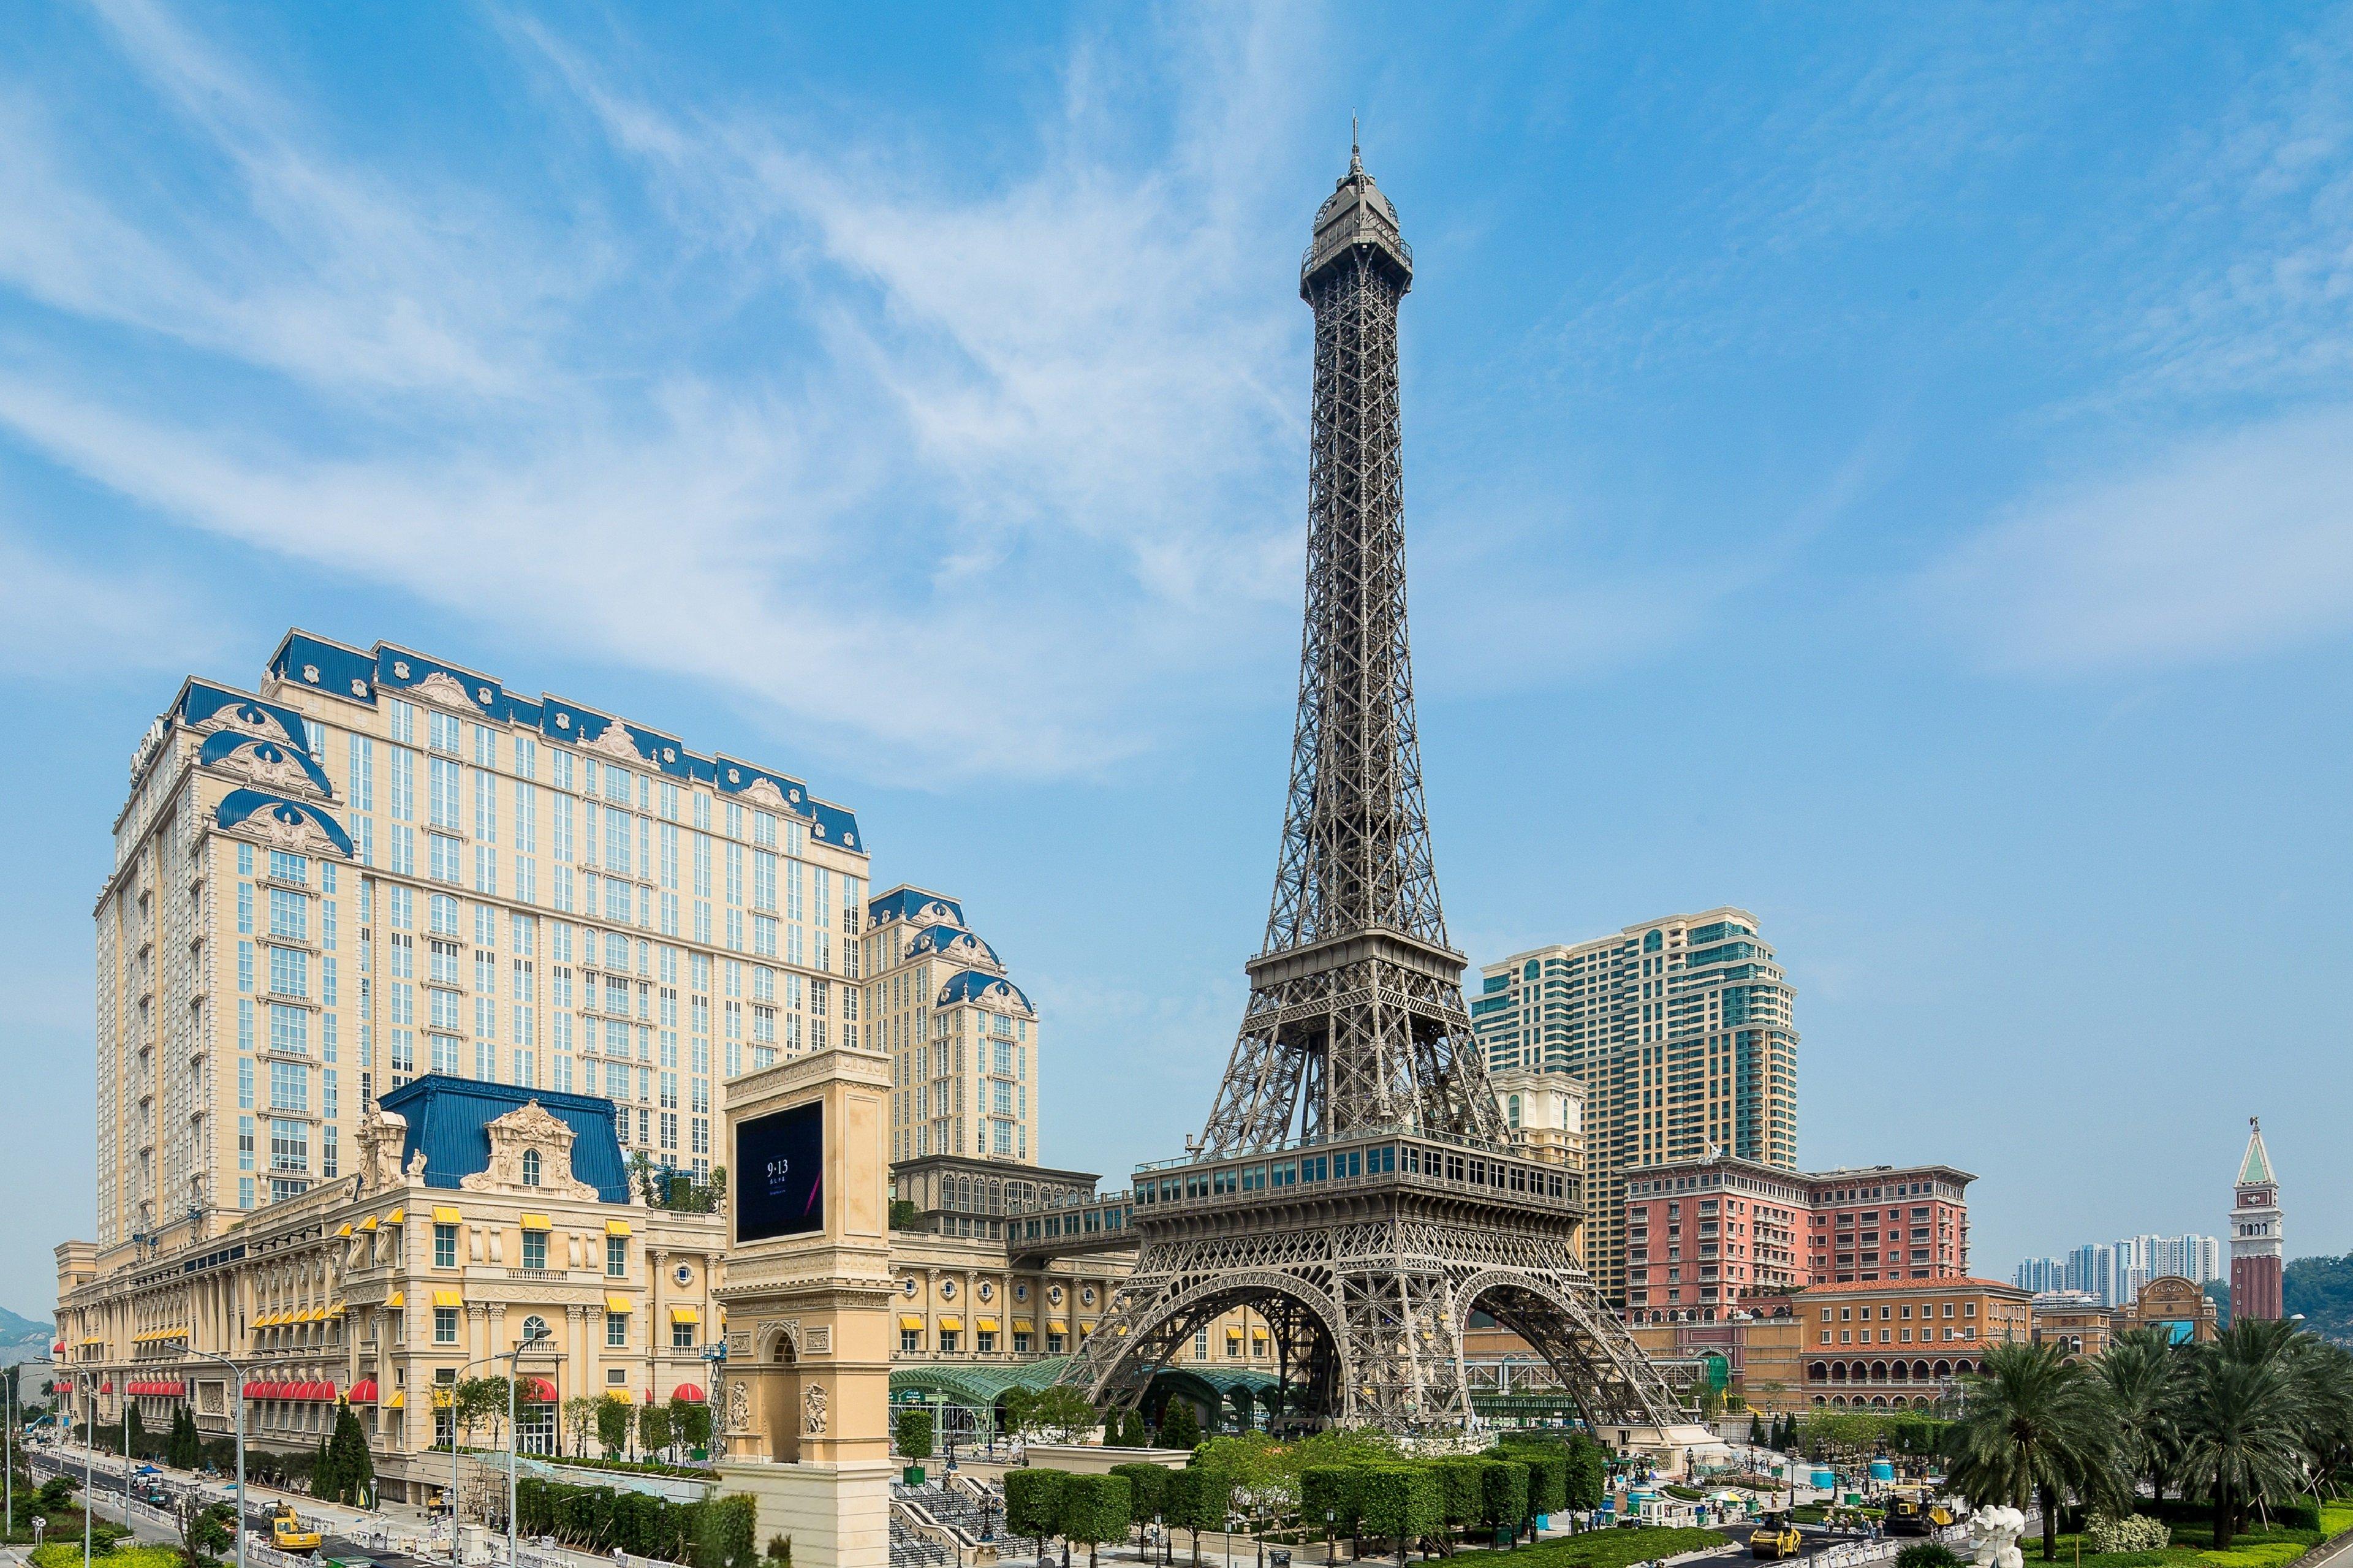 The Parisian Macao image